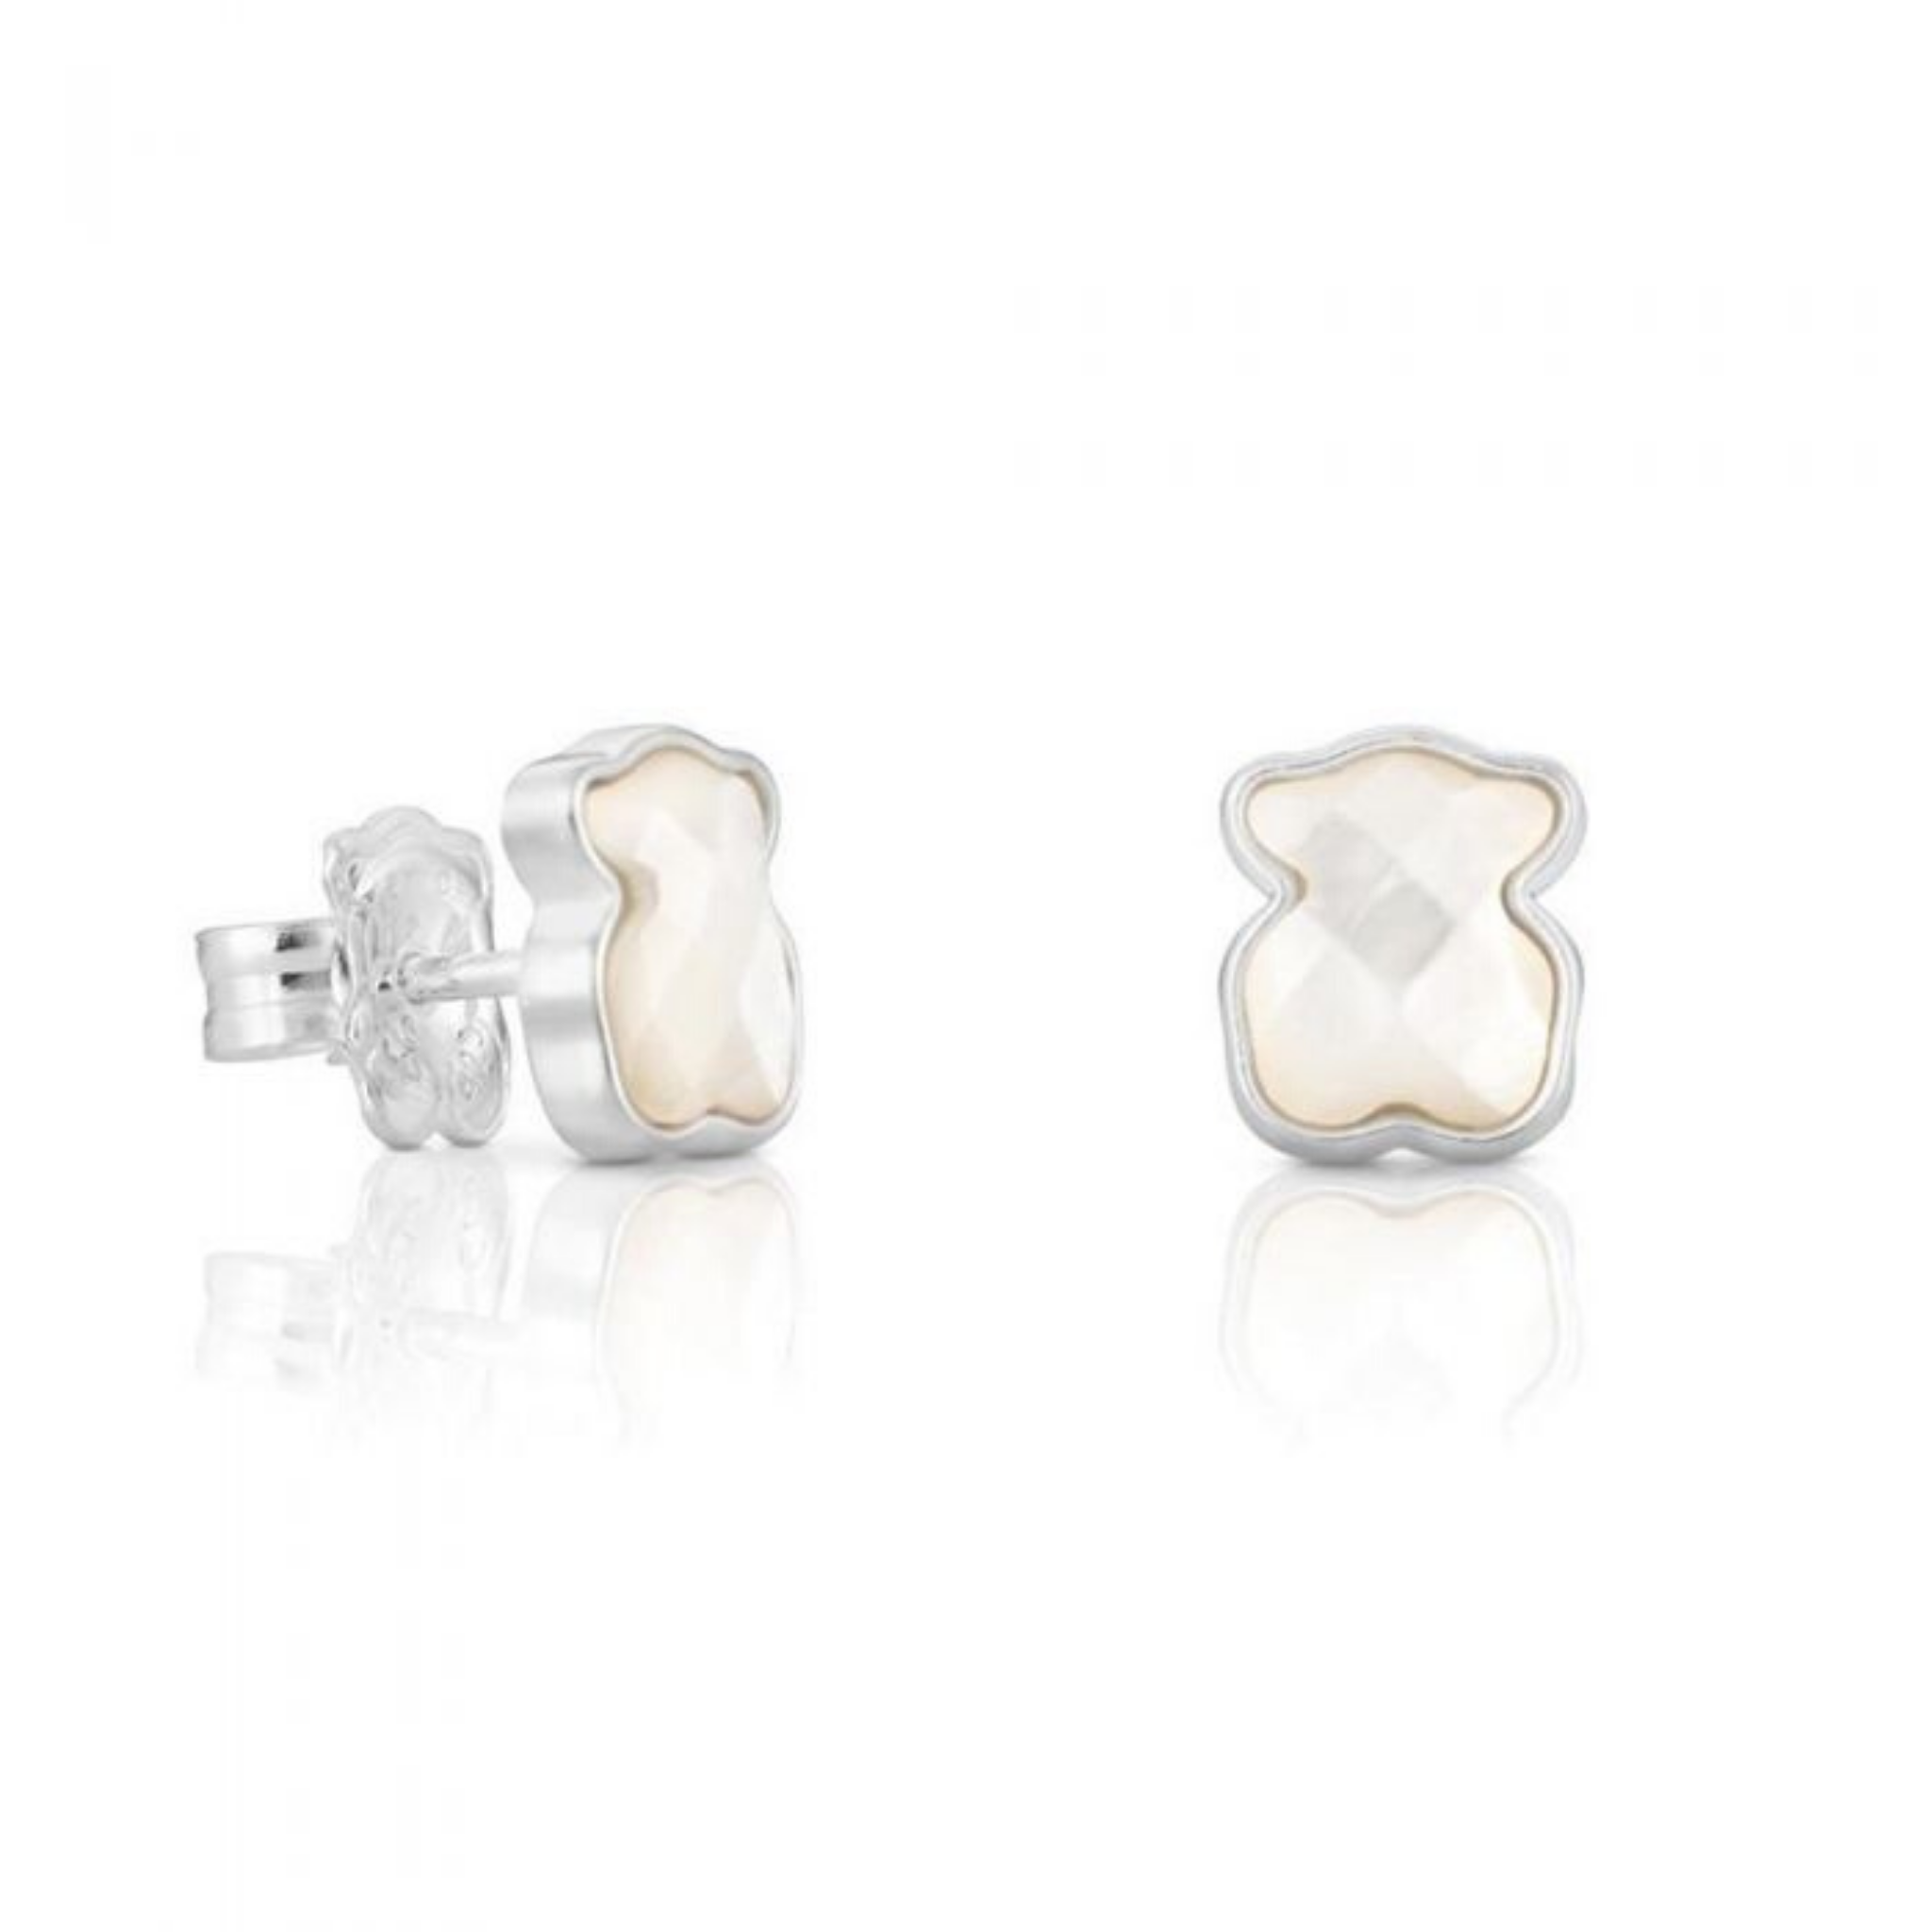 Silver TOUS Color Earrings - Monarch Jewels Alaska